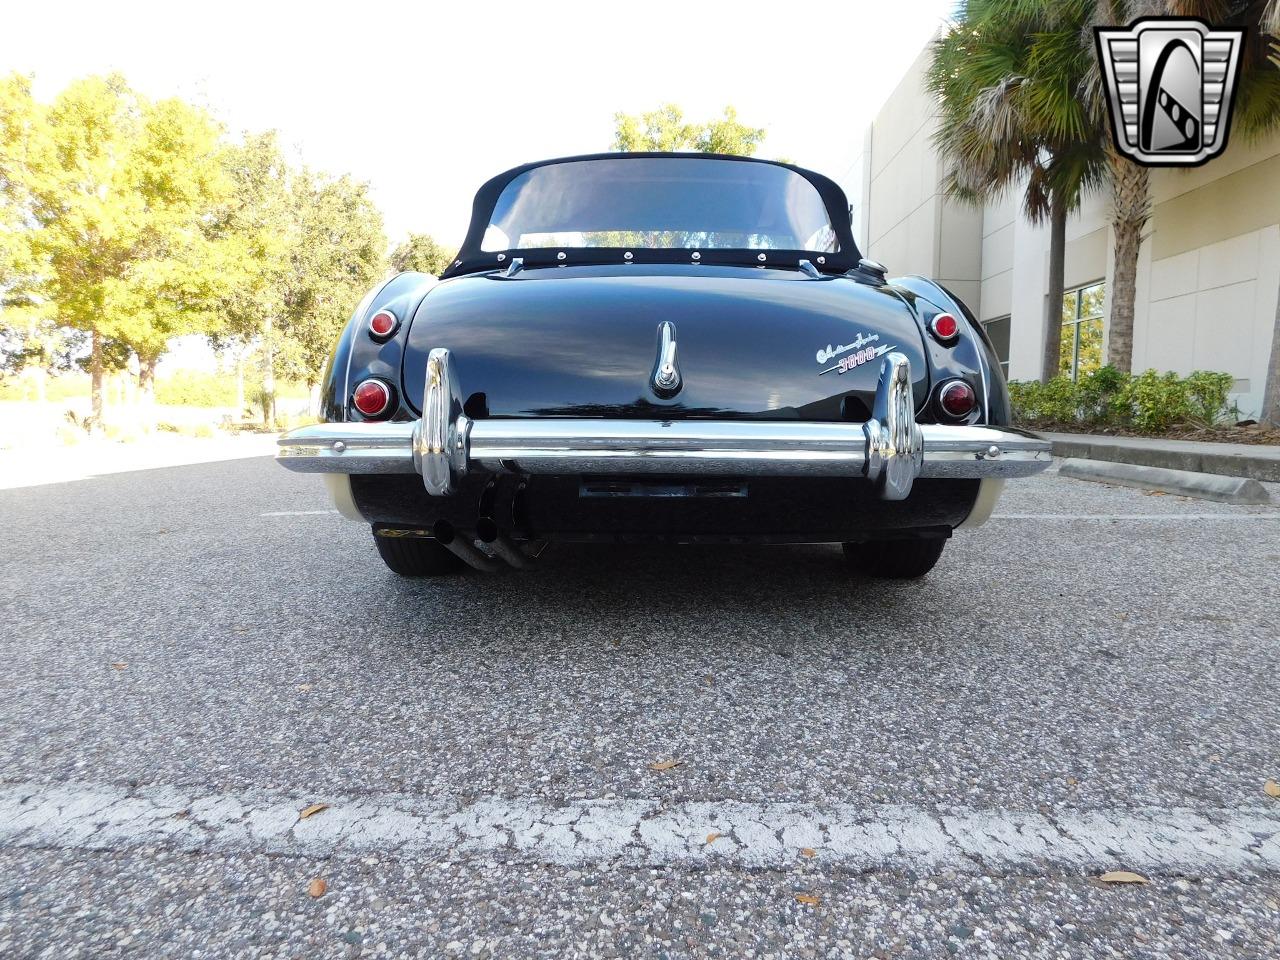 1960 Austin - Healey 3000